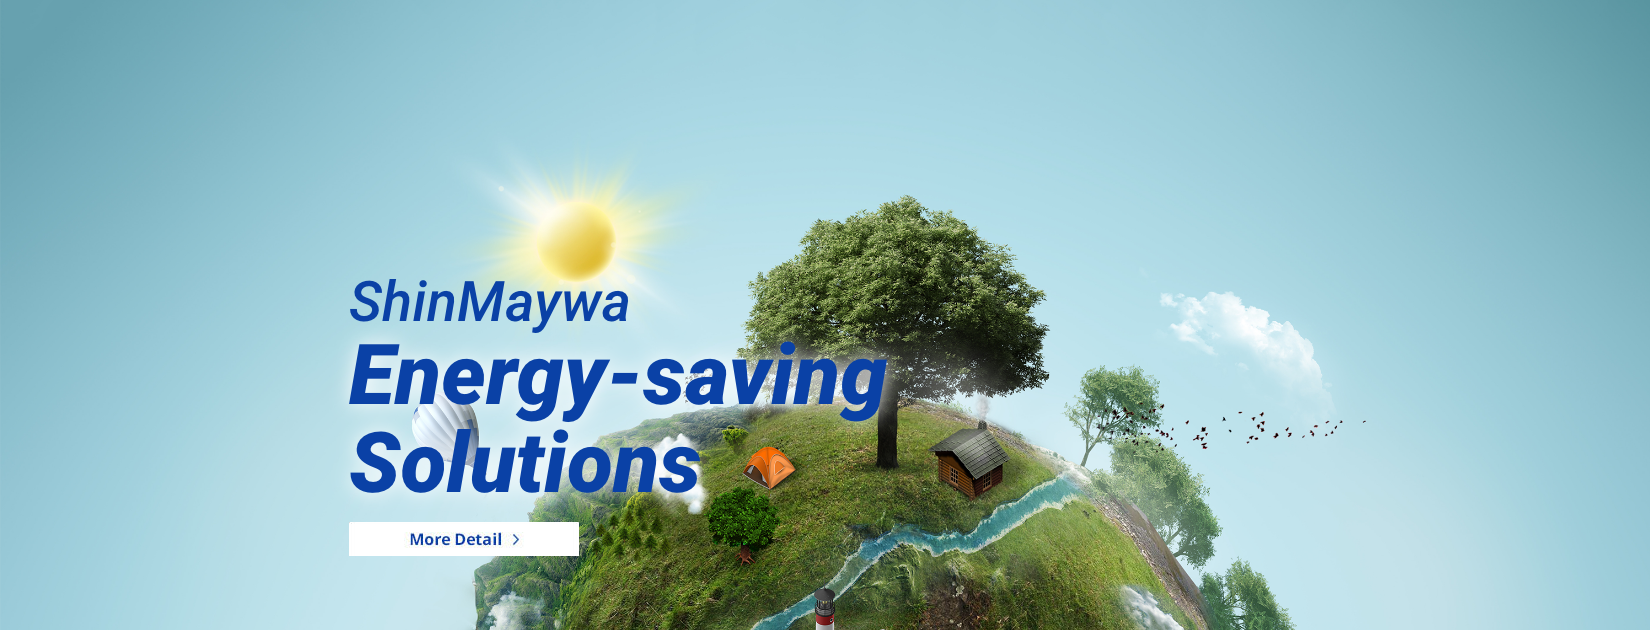 Energy-saving Solutions